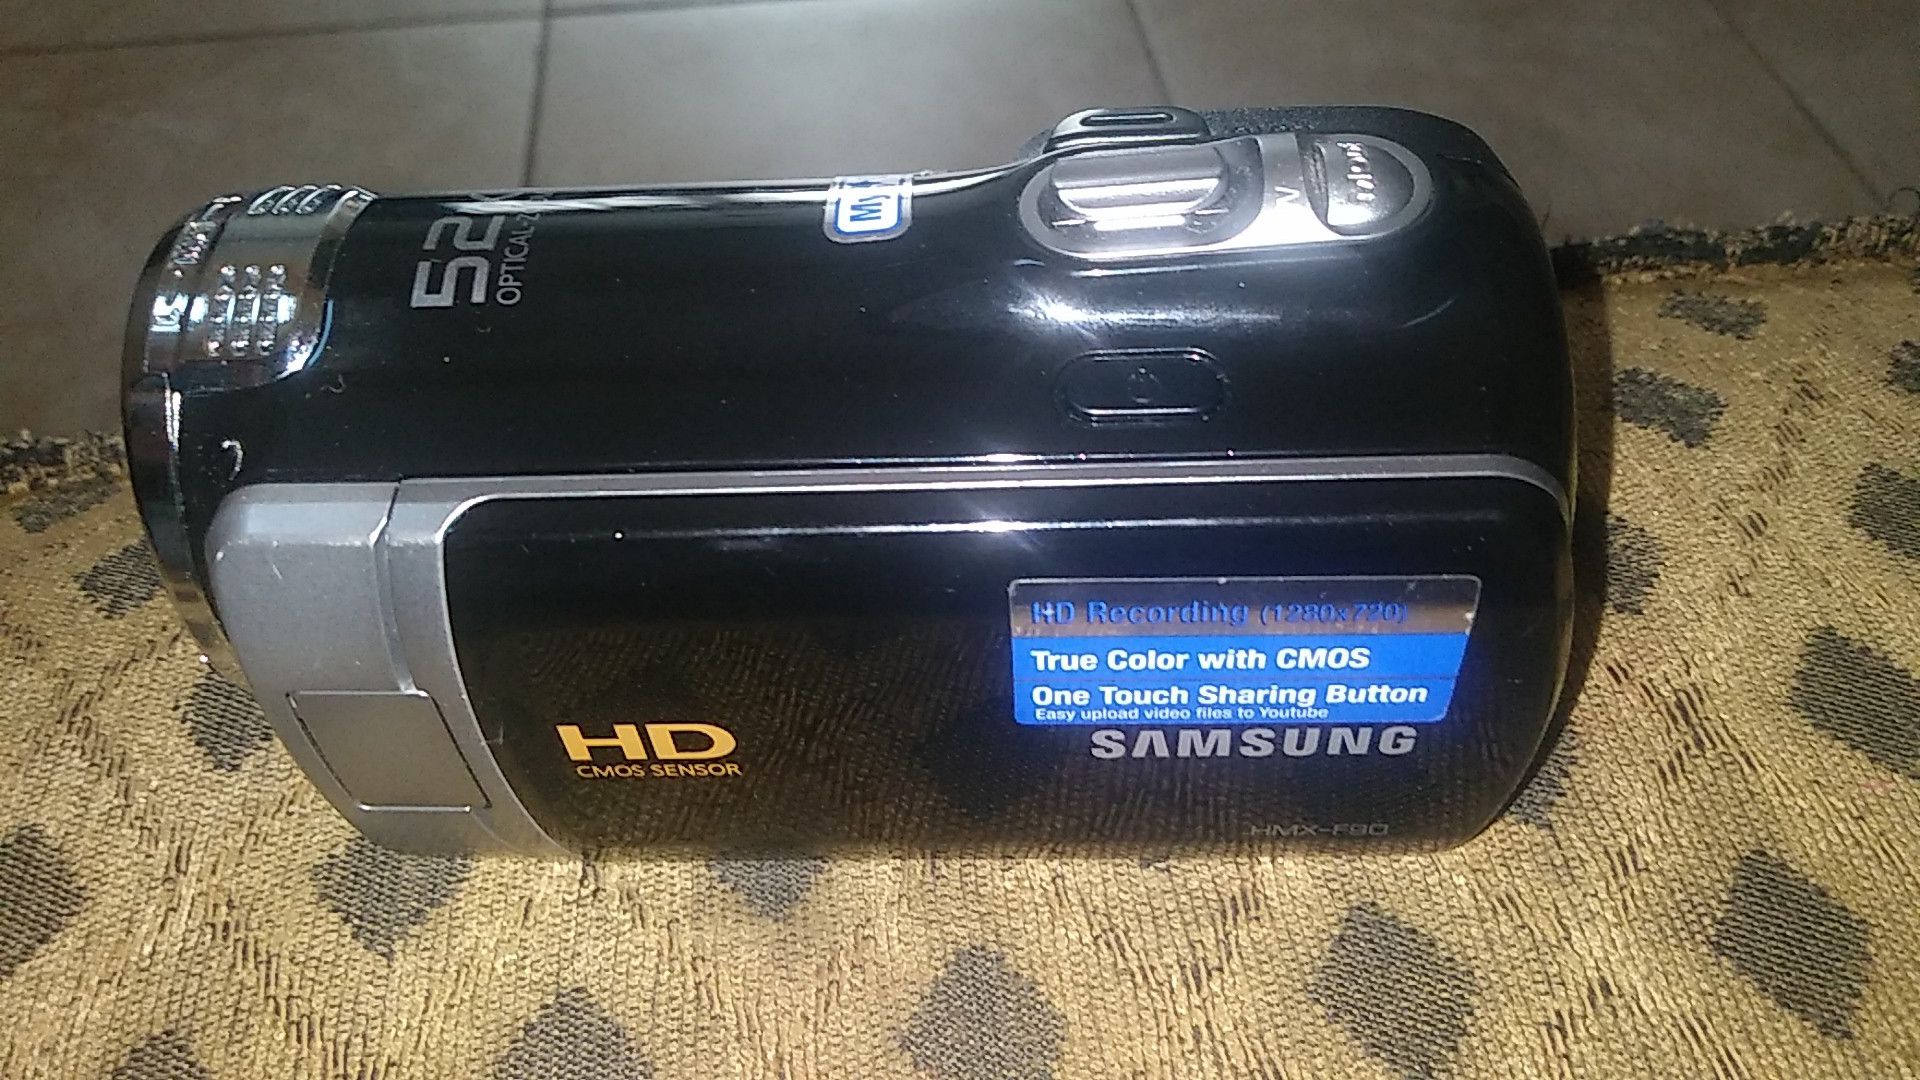 Samsung HD Digital Camcorder